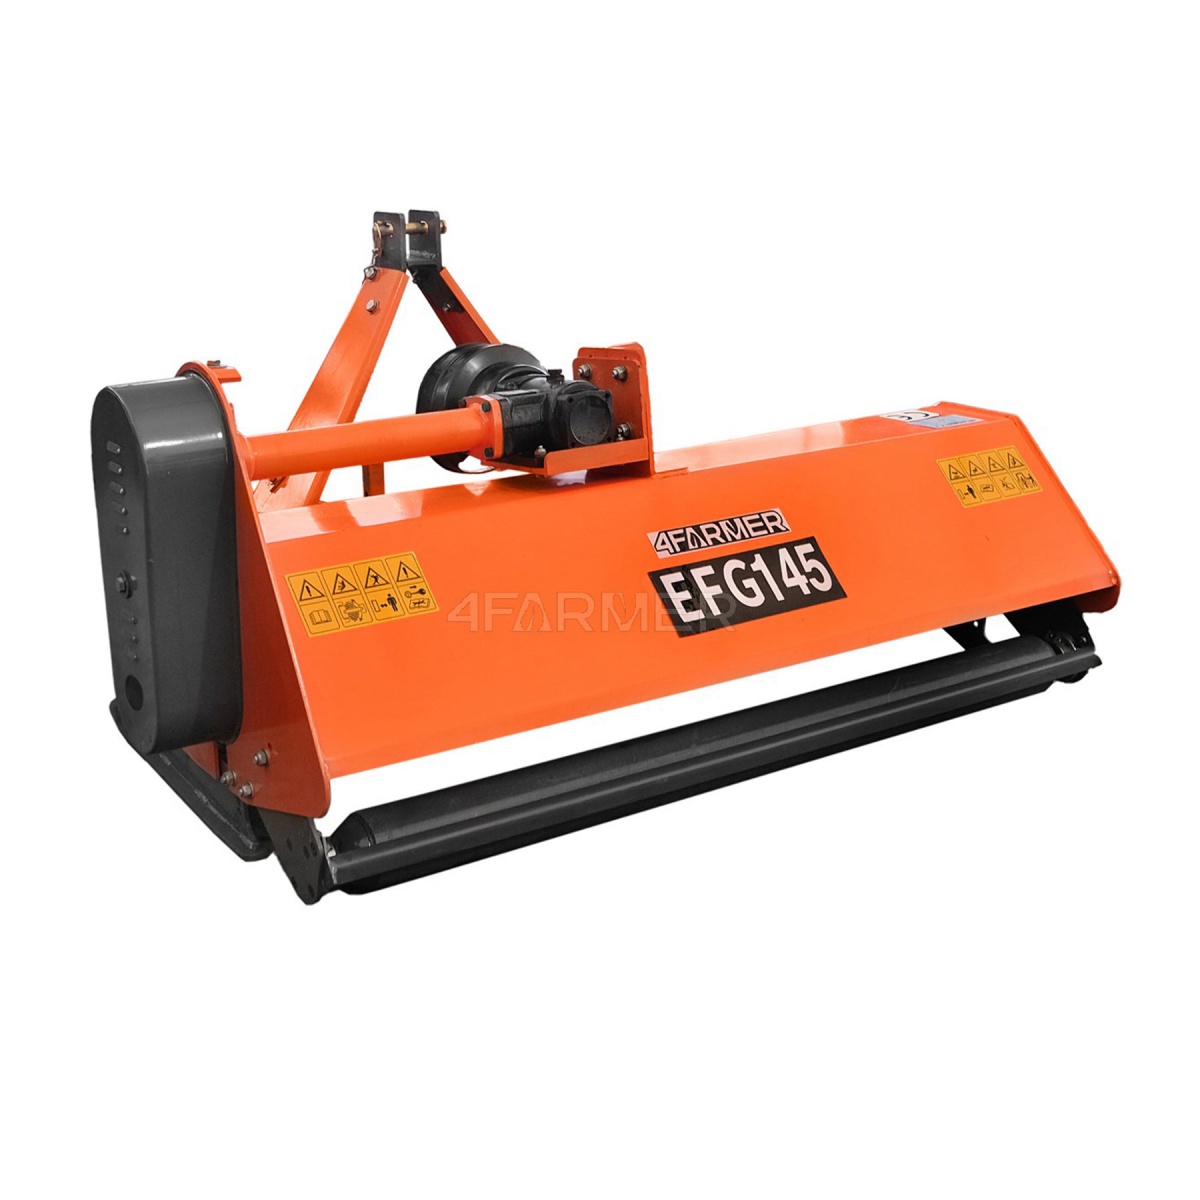 efg average - Flail mower EFG 135 4FARMER - orange (Y knives)